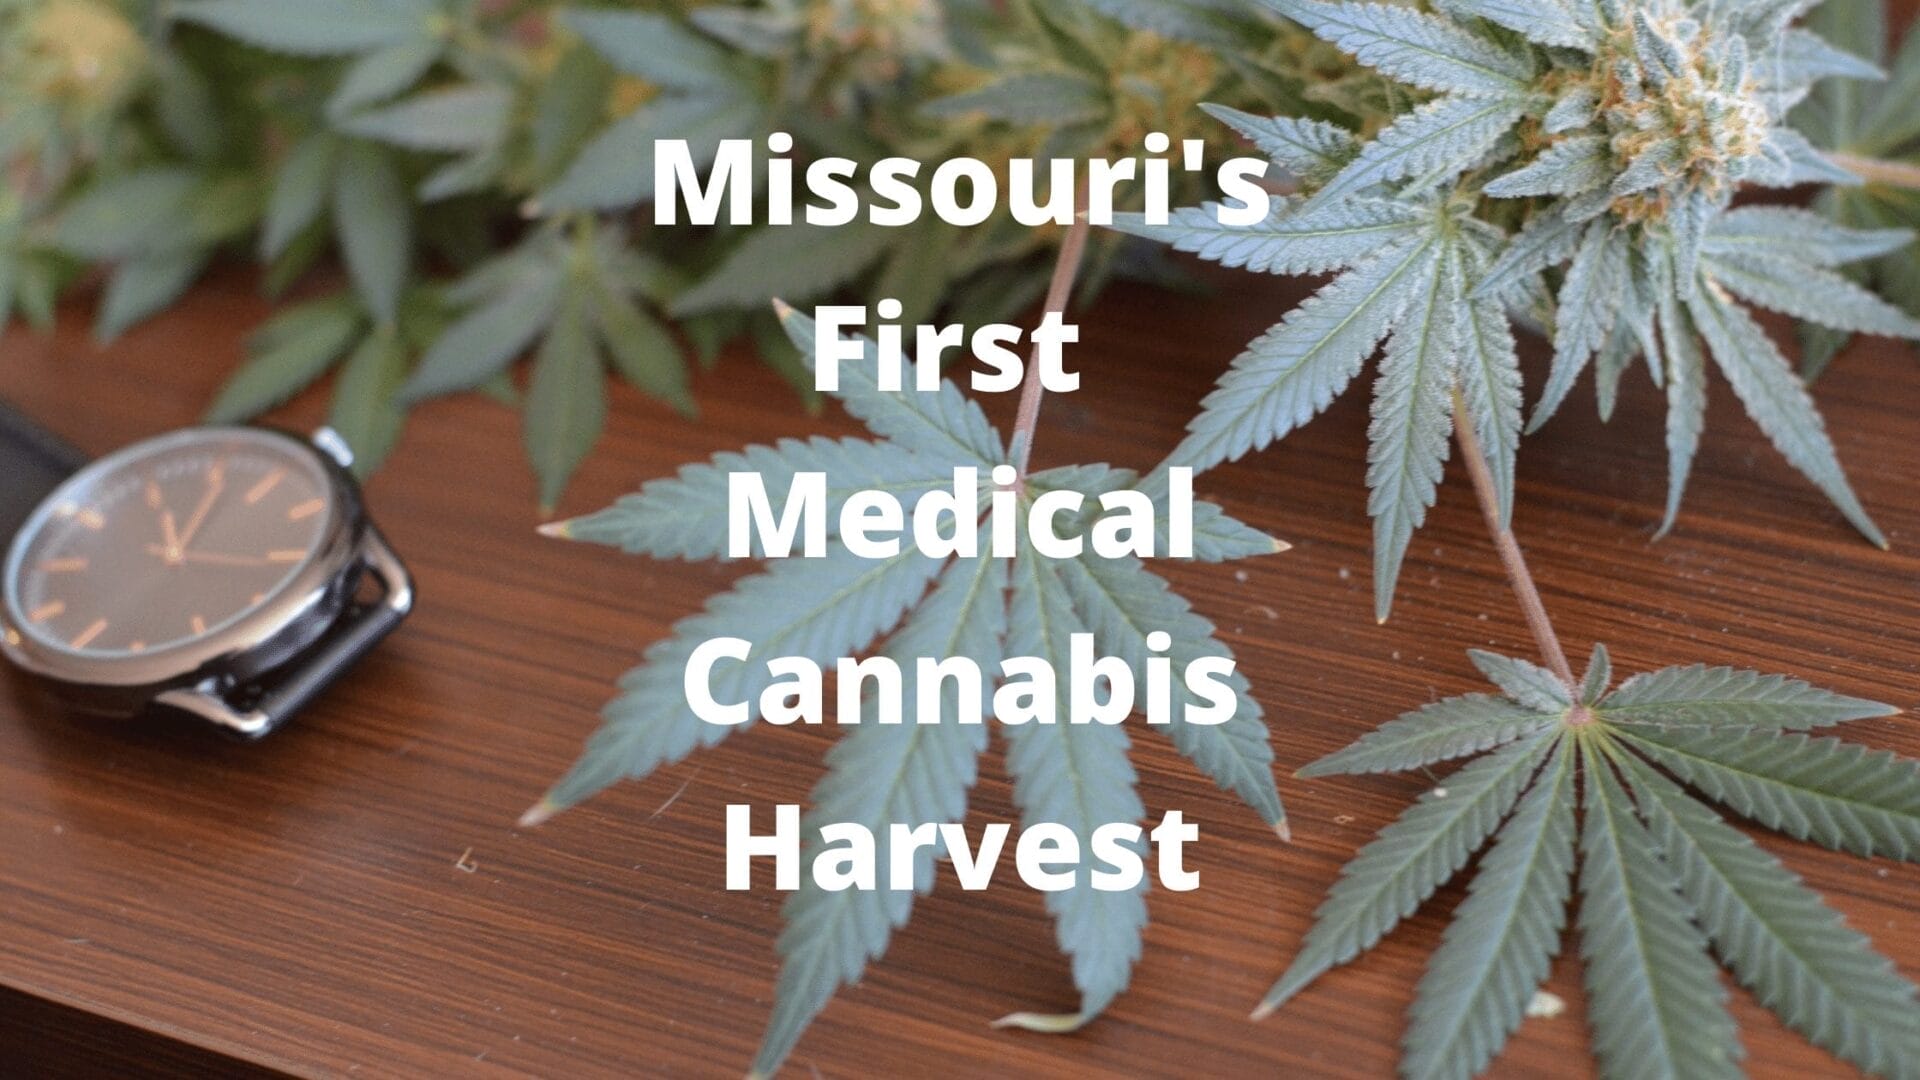 Missouri's First Medical Cannabis Harvest